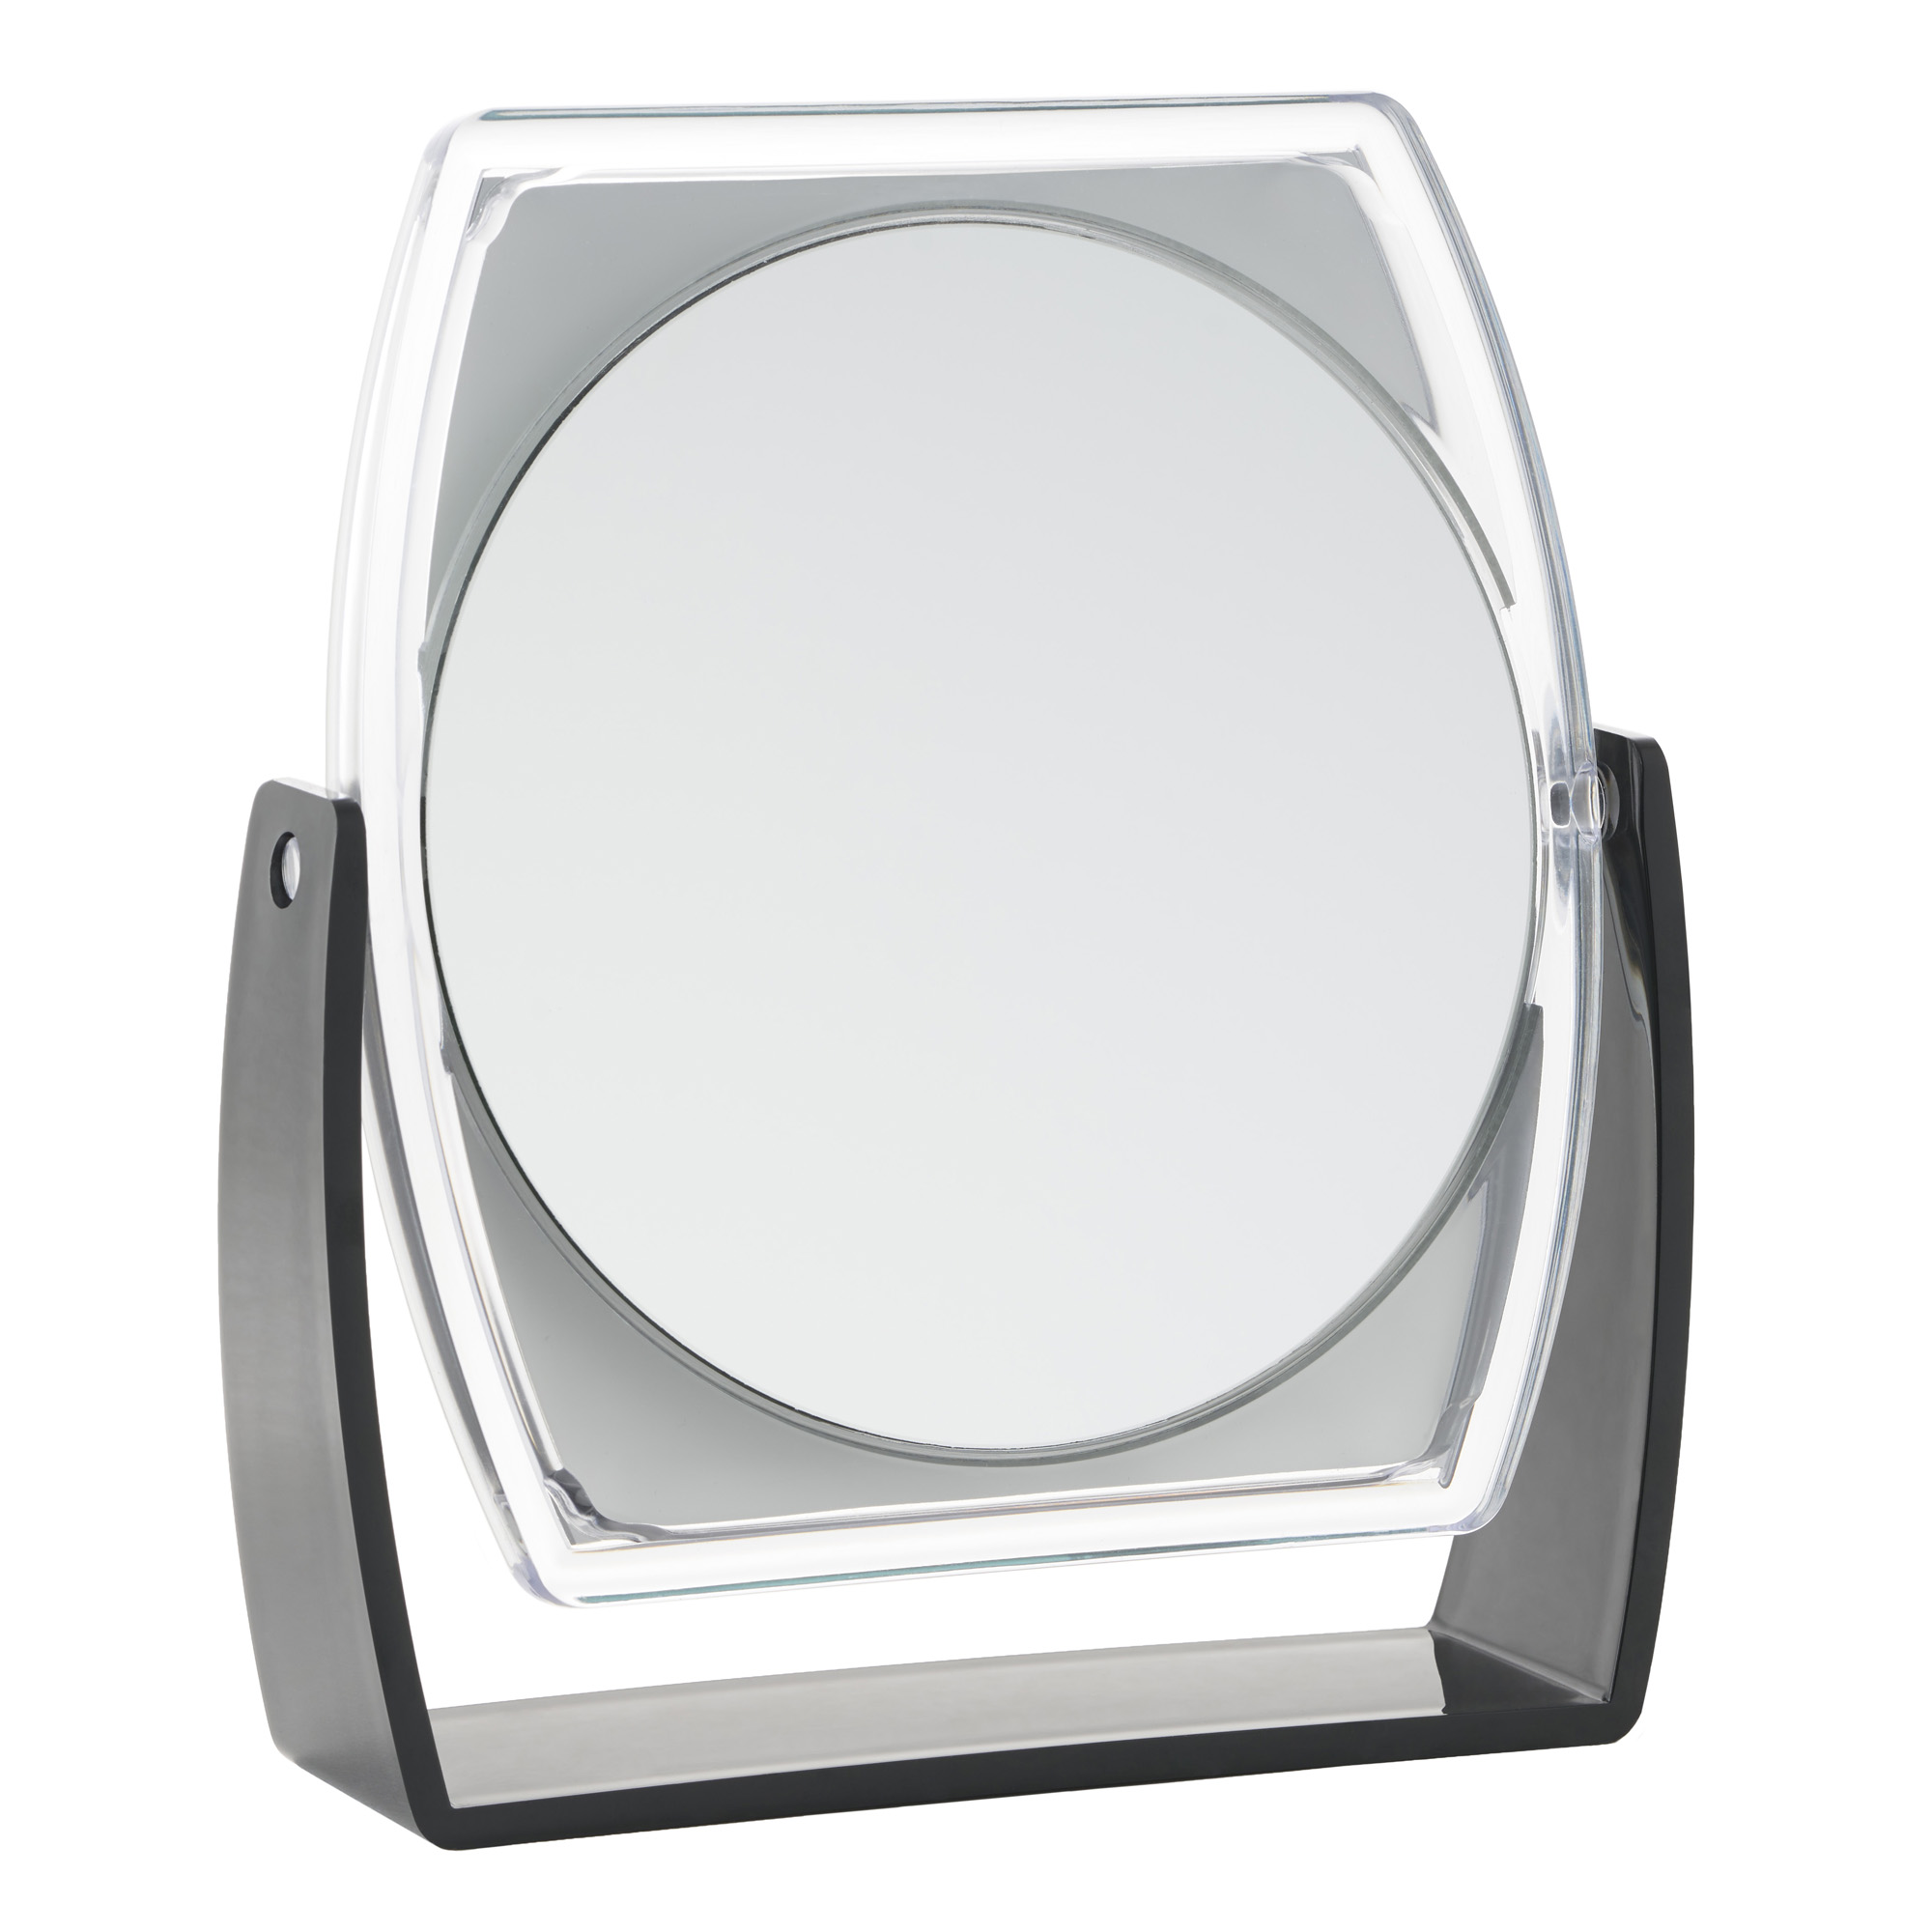 Reversible tabletop mirror 1X & 10X